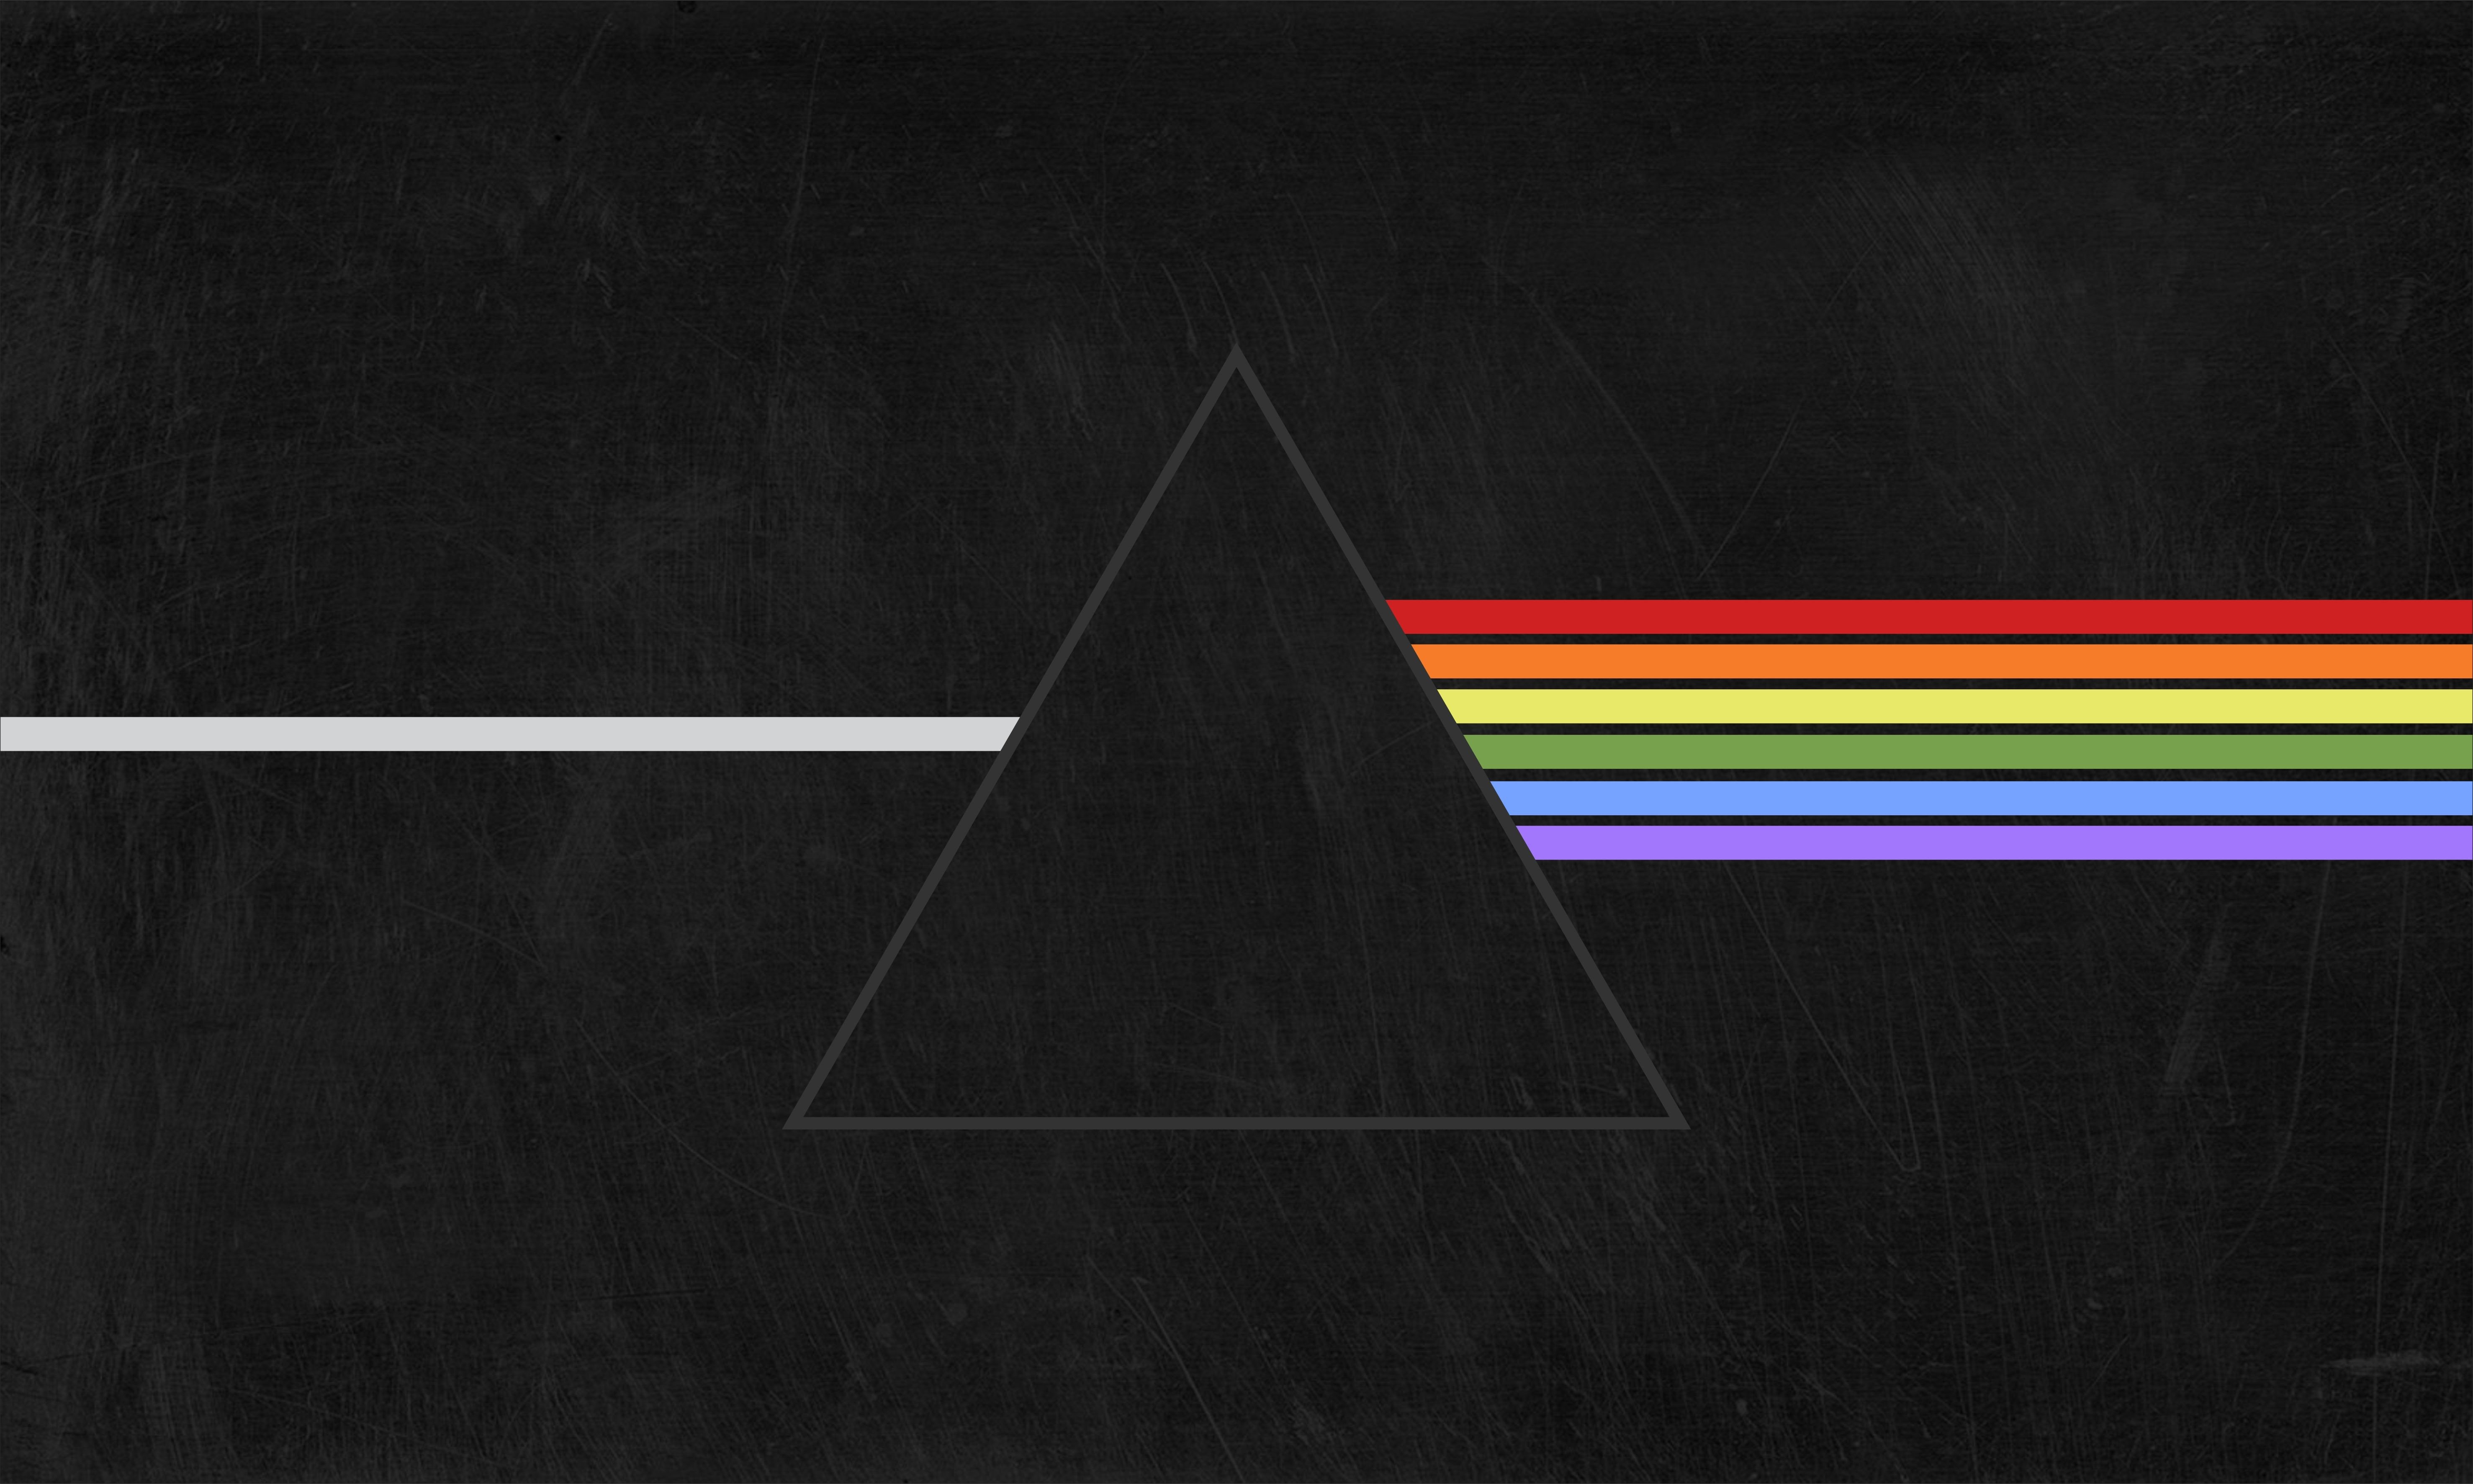 Pink Floyd Windows 11/10 Theme - themepack.me